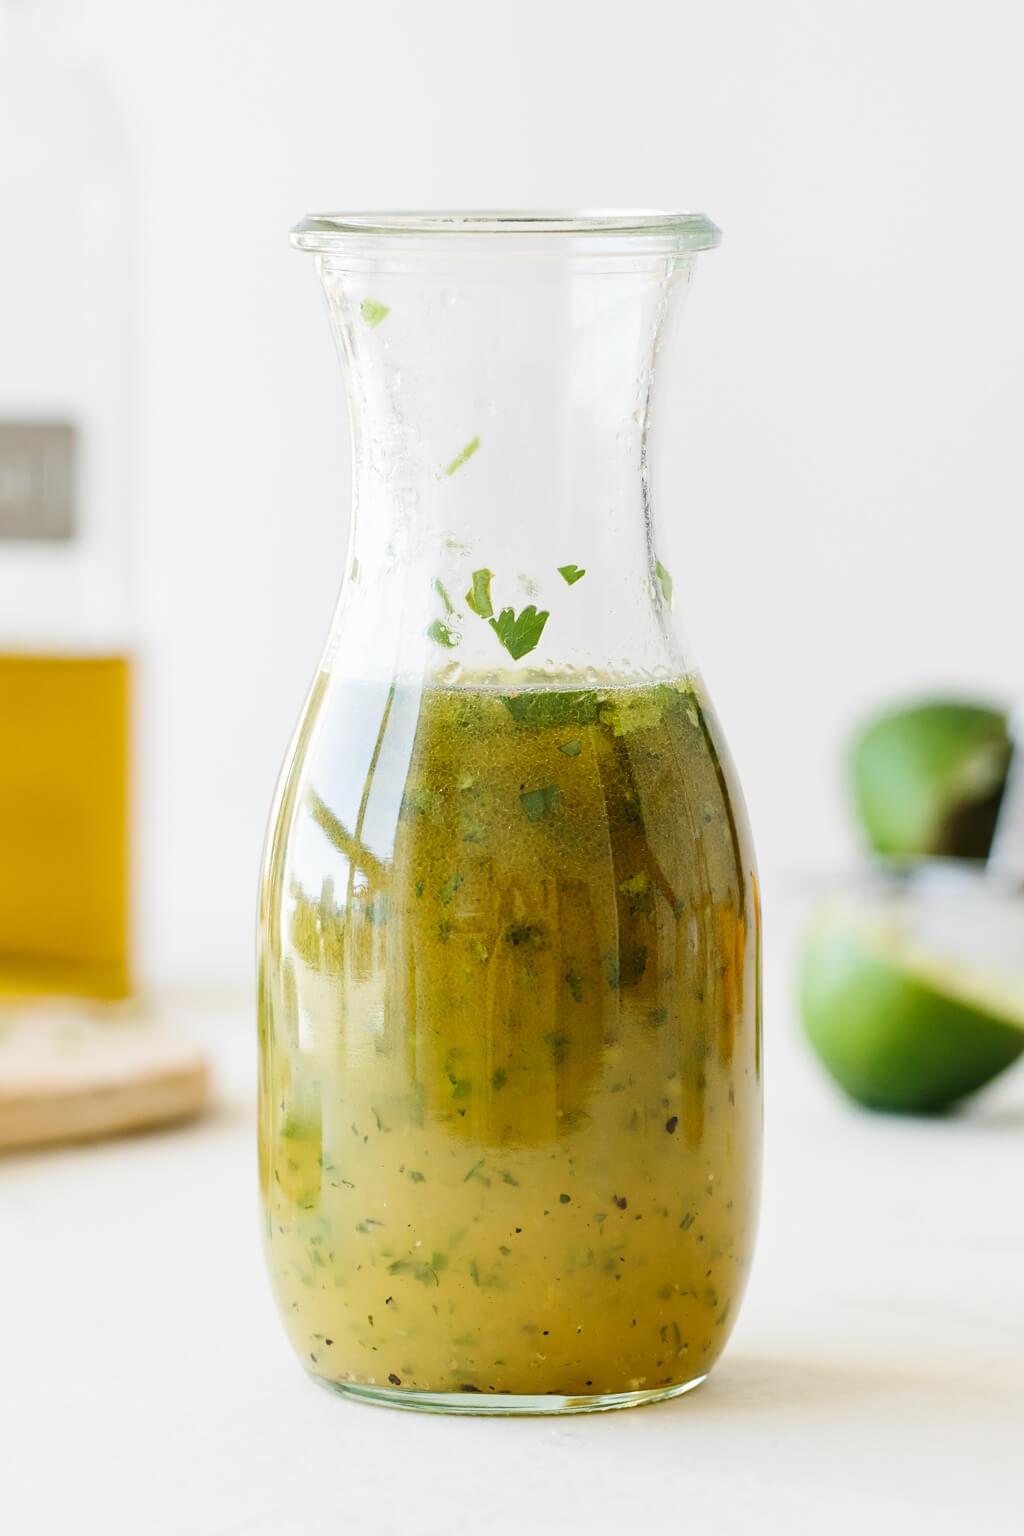 Orange Juice-Lime Salad Dressing